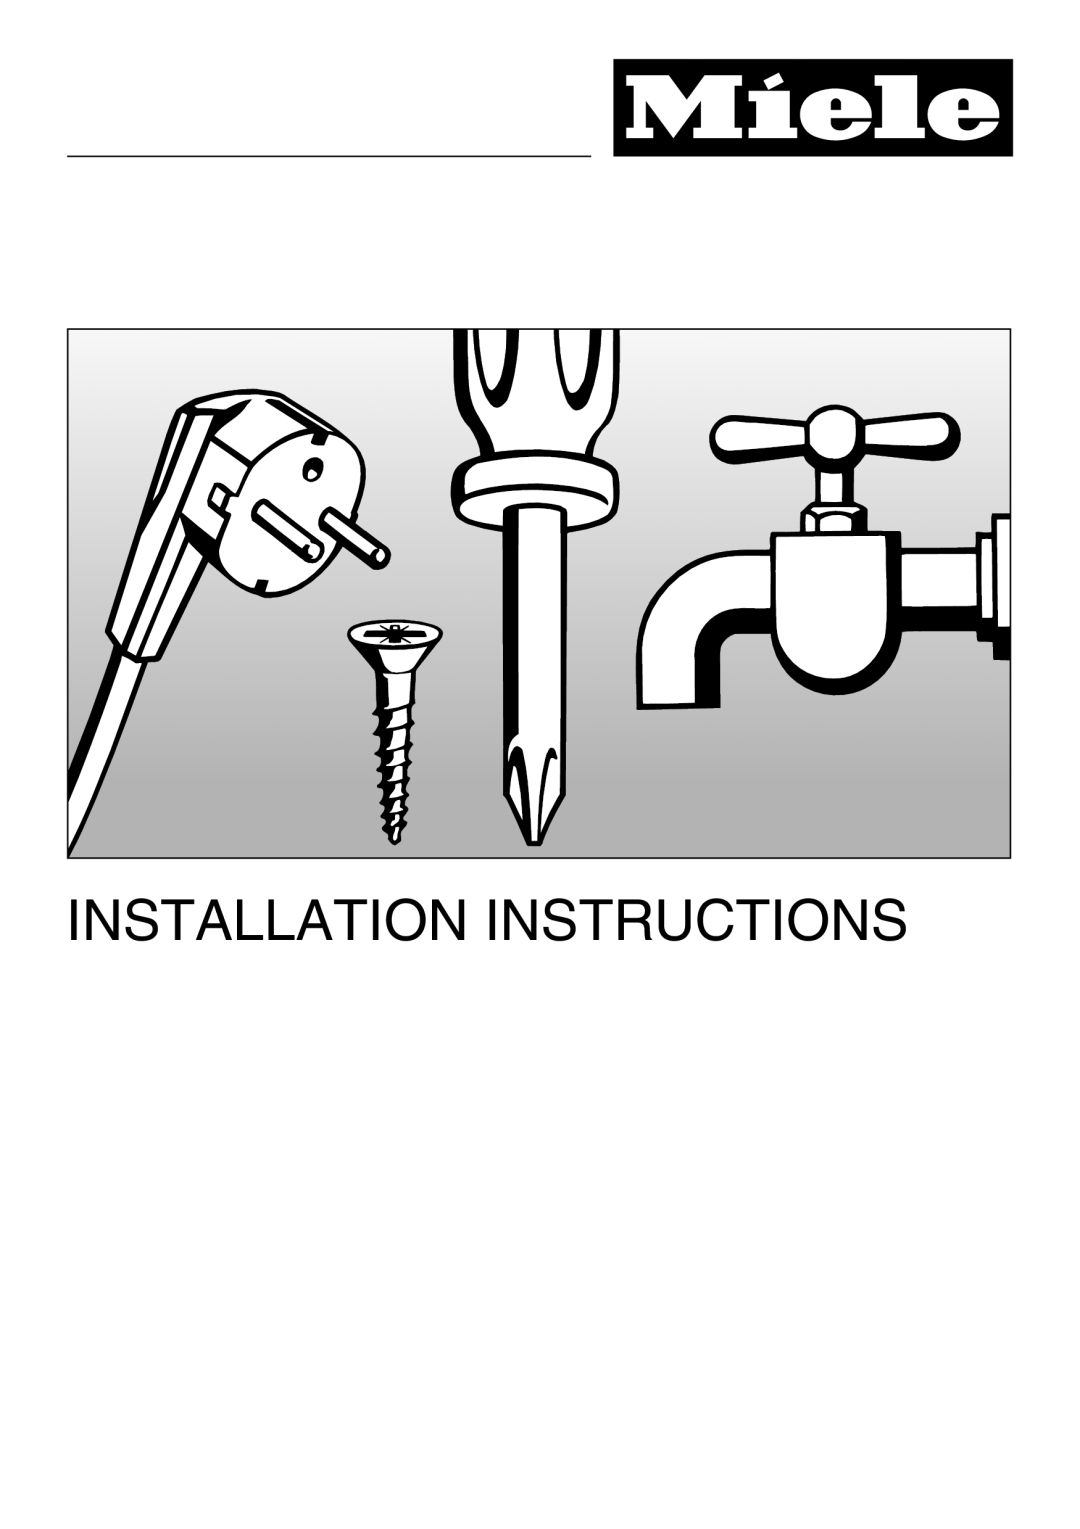 Miele G 7883 installation instructions Installation Instructions 